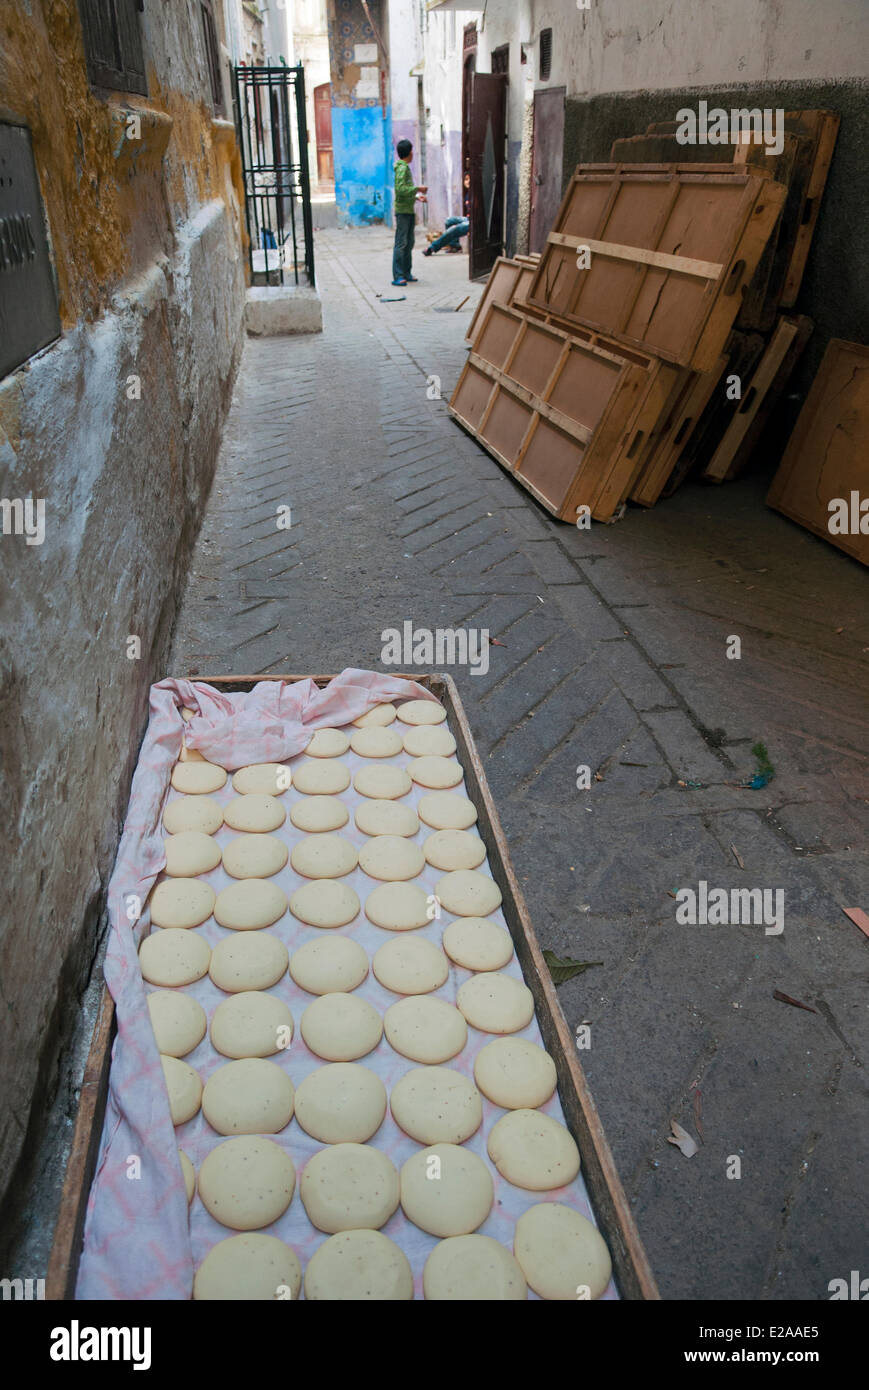 Morocco, Rif region, Tetouan, medina listed as World Heritage by UNESCO, sourdough bread in the street Stock Photo